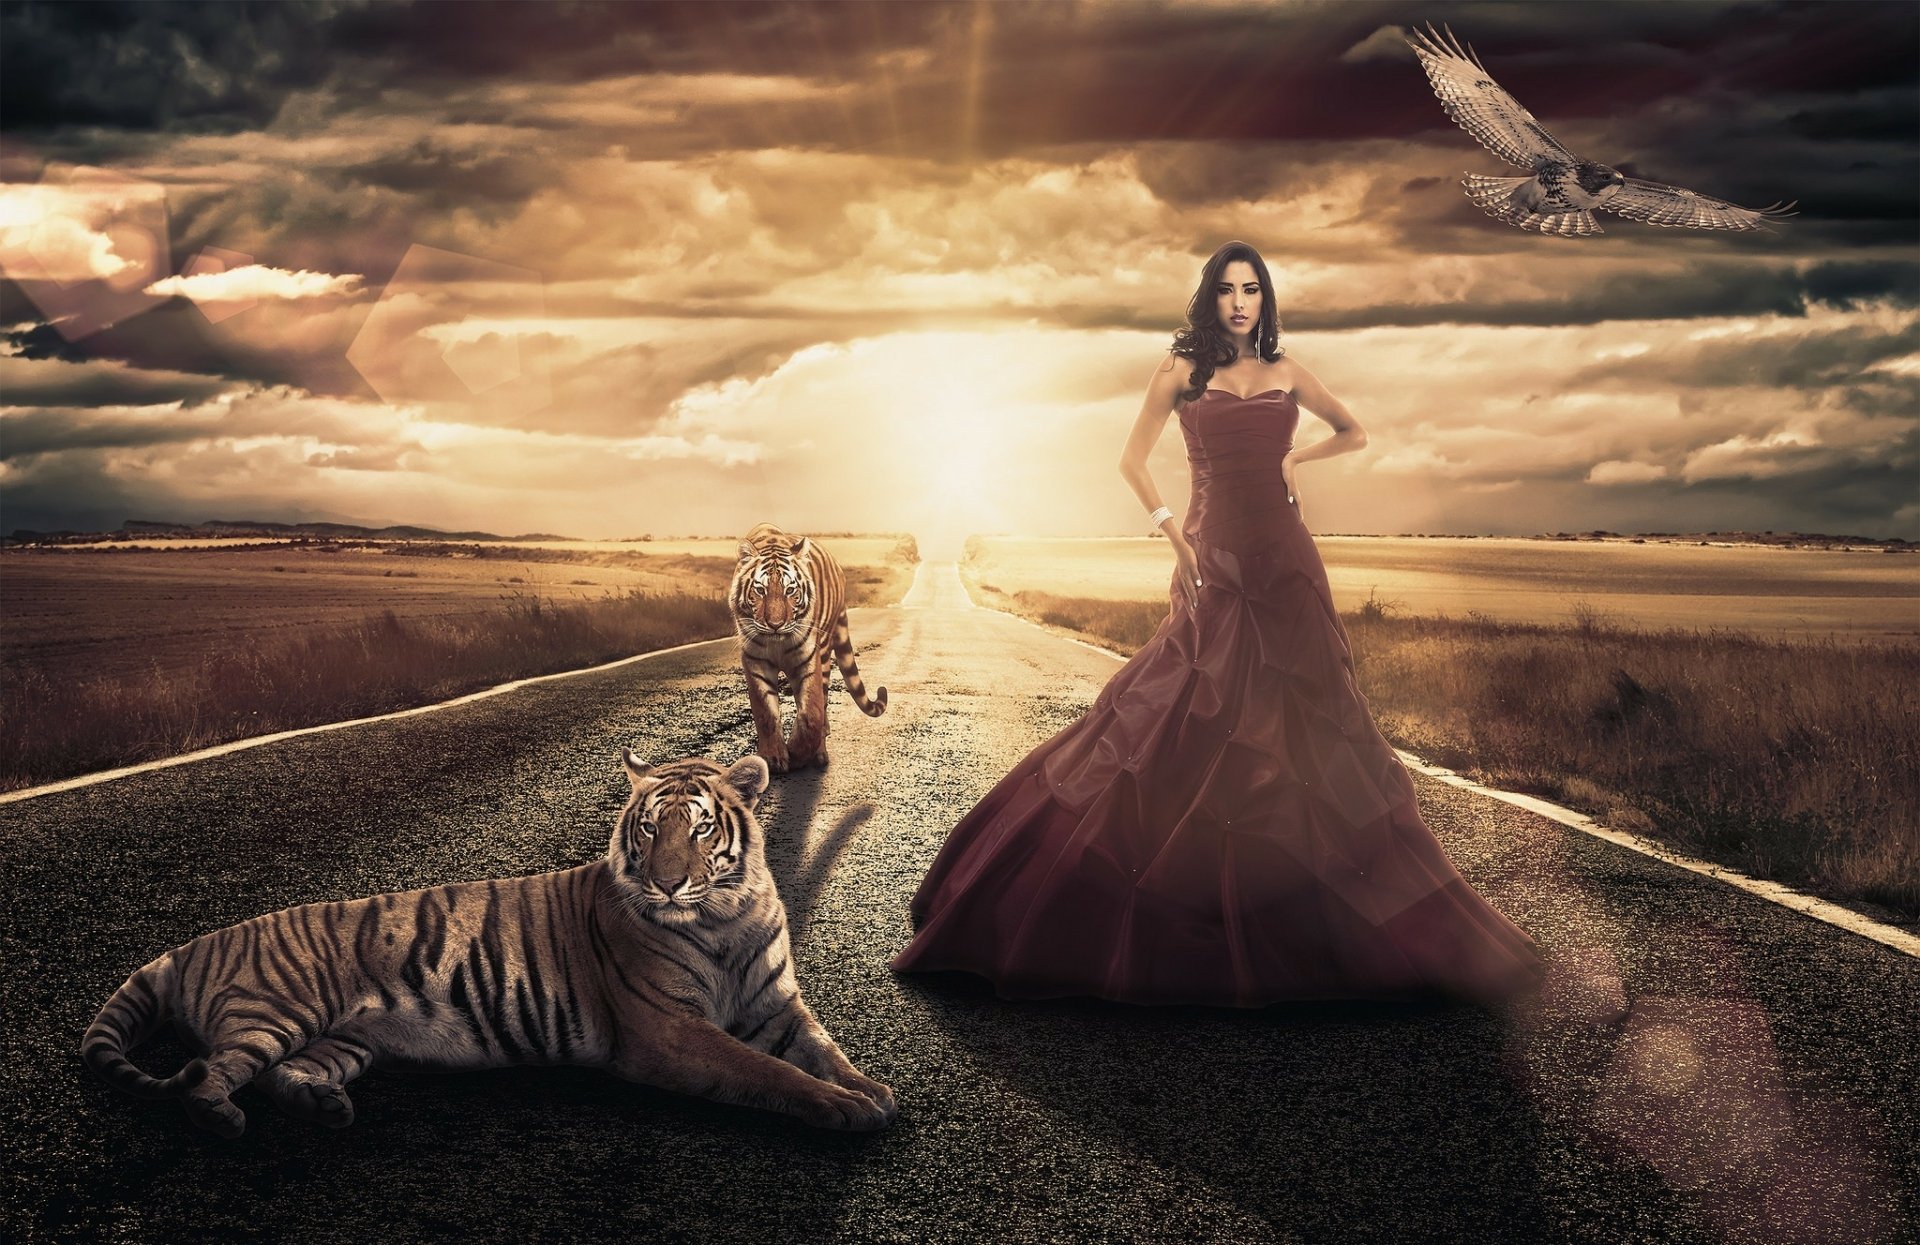 Download Manipulation Dress Road Sunset Bird Tiger Woman Andresa Alves  HD Wallpaper by Jackson Carvalho